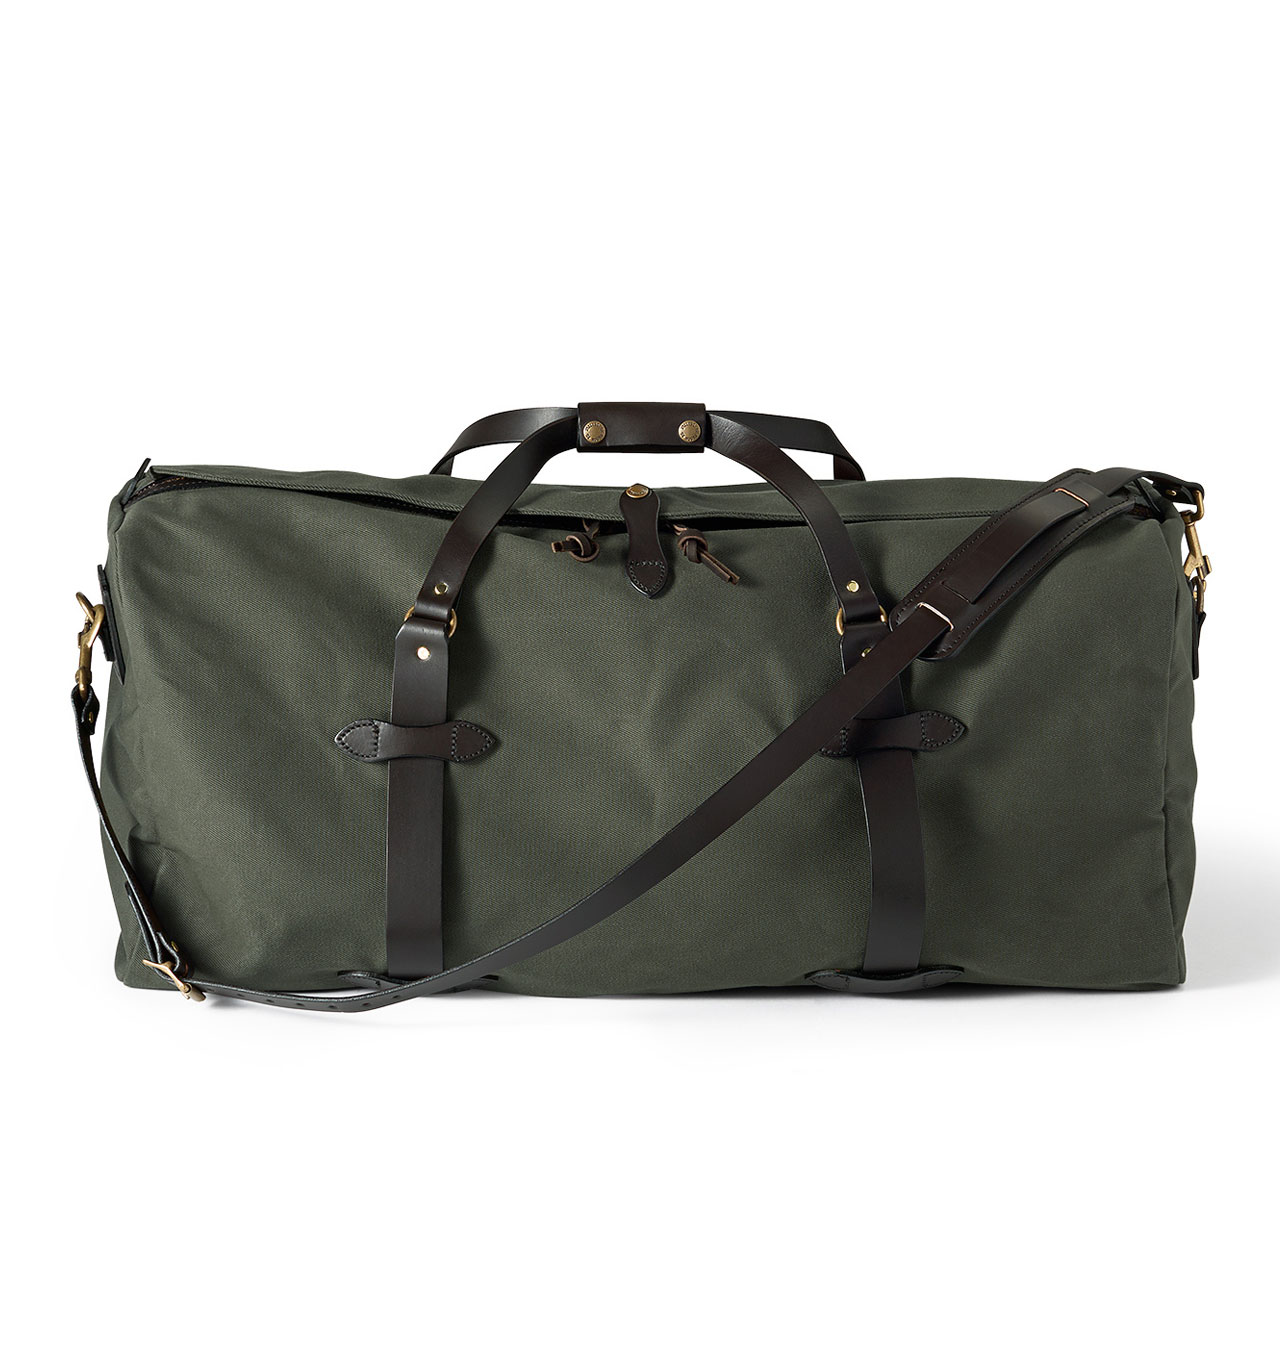 Filson - Duffle Bag Large - Otter Green